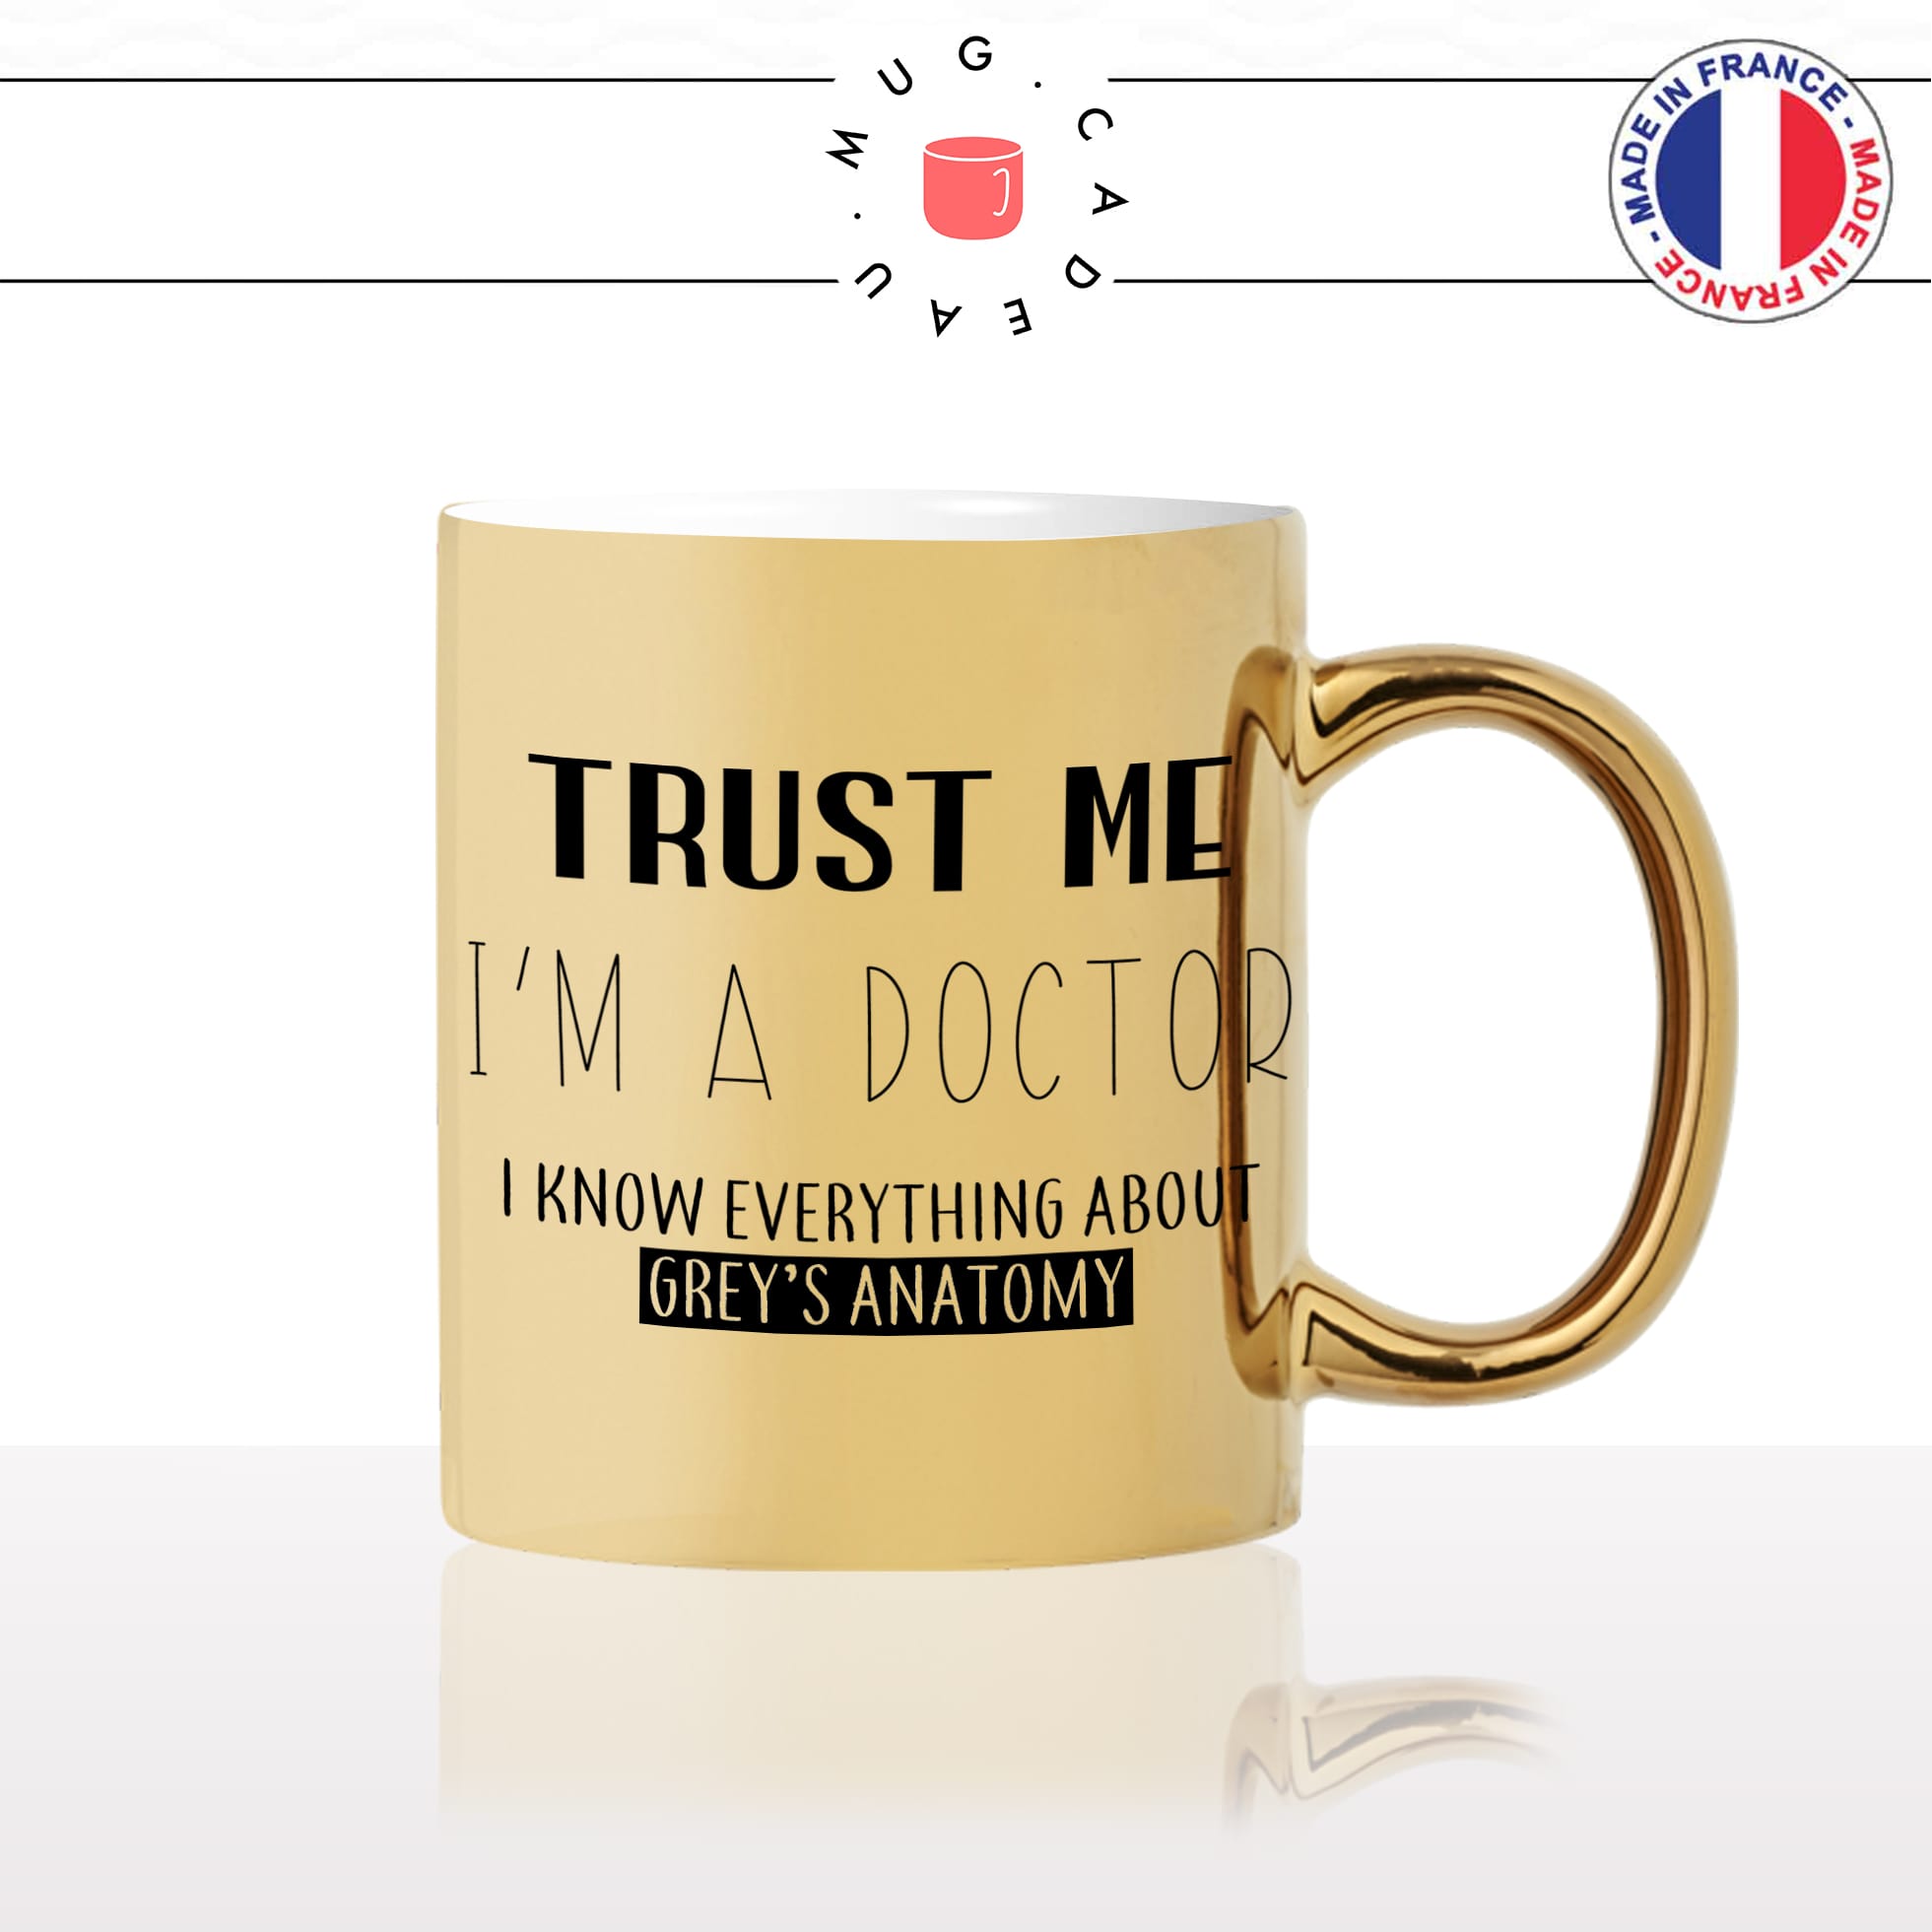 mug-tasse-or-gold-doré-école-de-medecine-fac-trust-me-im-a-doctor-docteur-greys-anatomy-série-fun-original-humour-idée-cadeau-café-thé-min